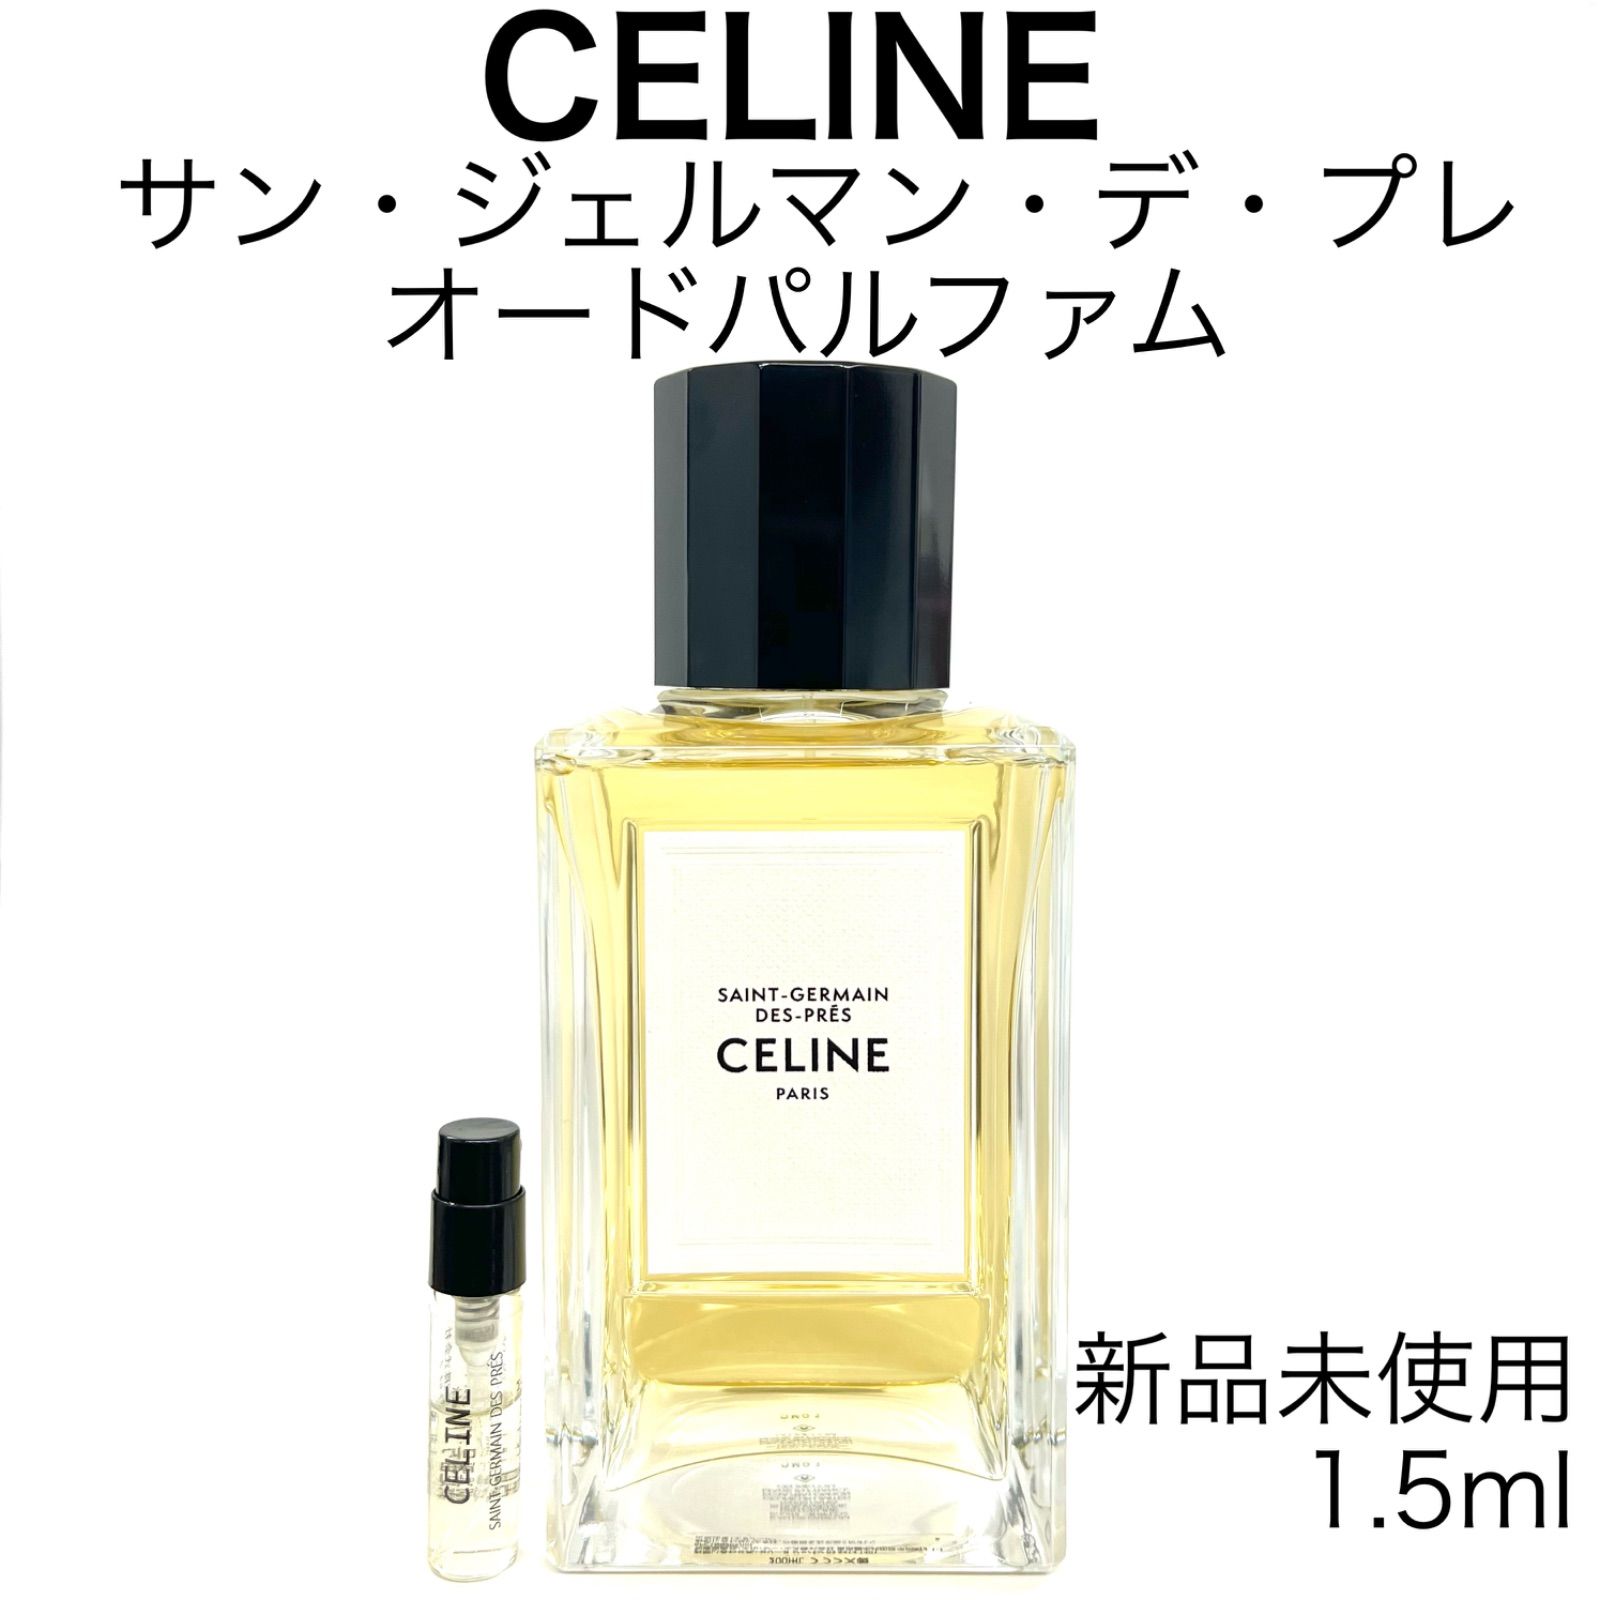 CELINE セリーヌ サン・ジェルマン・デ・プレ 香水 1.5ml - セット割 ...